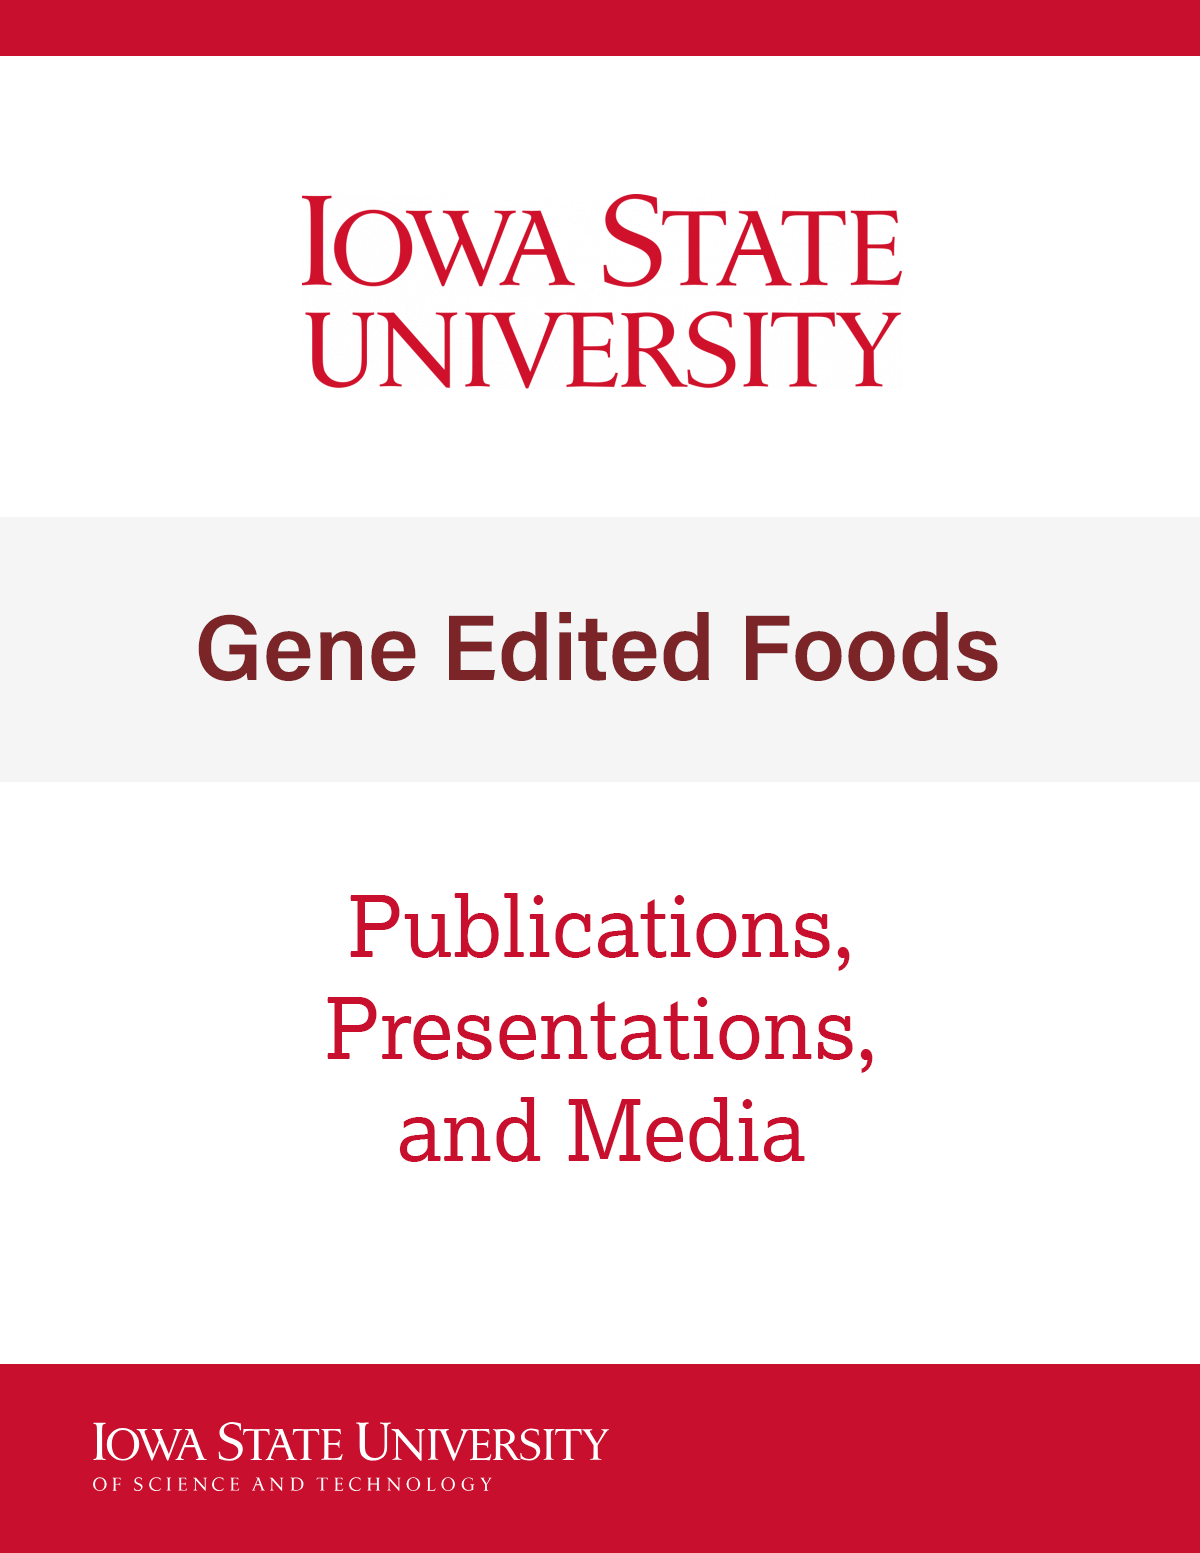 ISU Gene Editing Foods